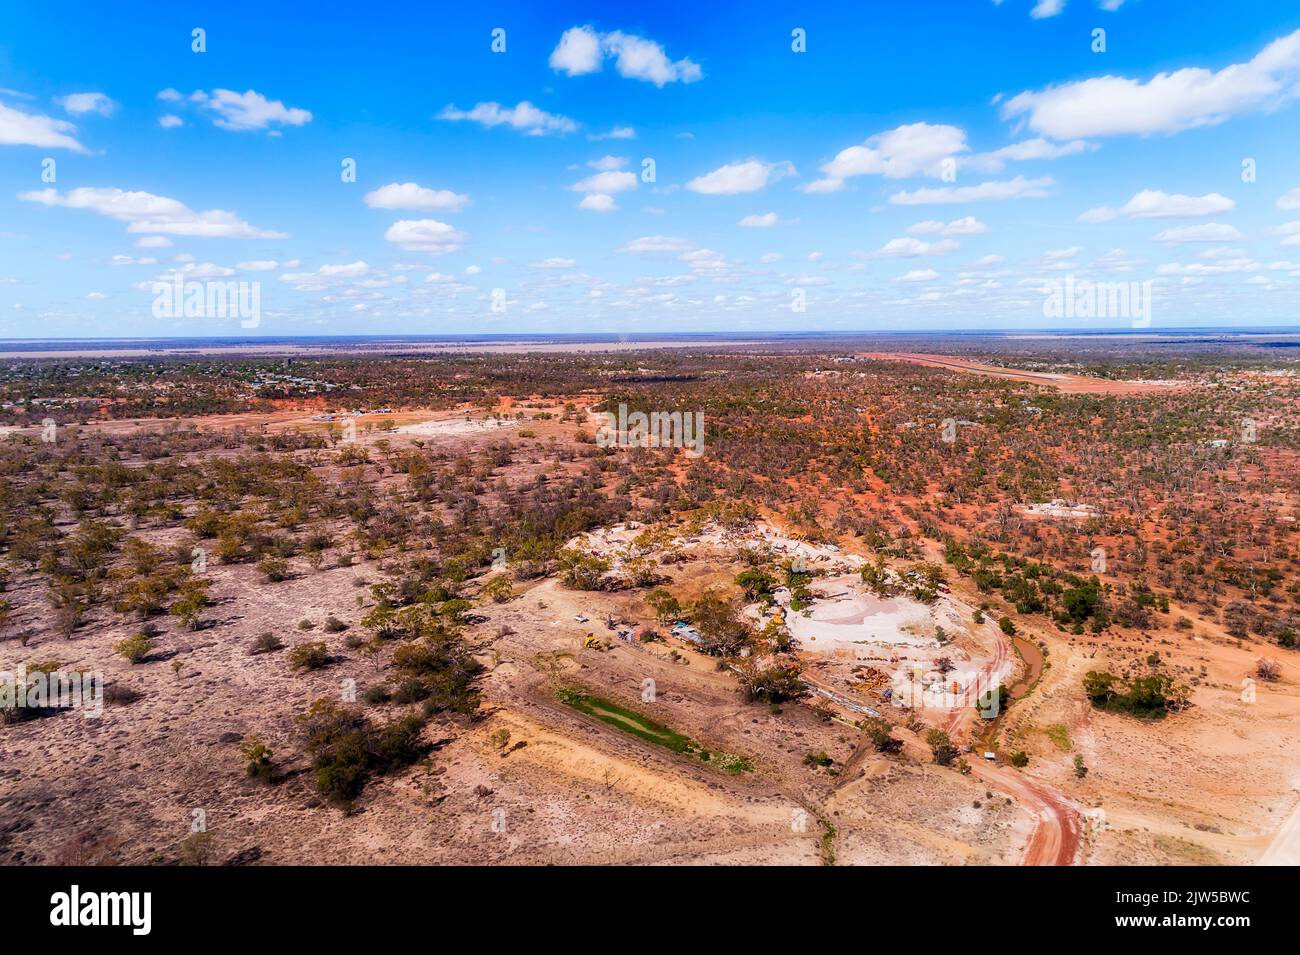 Flache Ebenen mit rotem Boden Australien Outback um Blitzkamm opal Minenschächte. Stockfoto